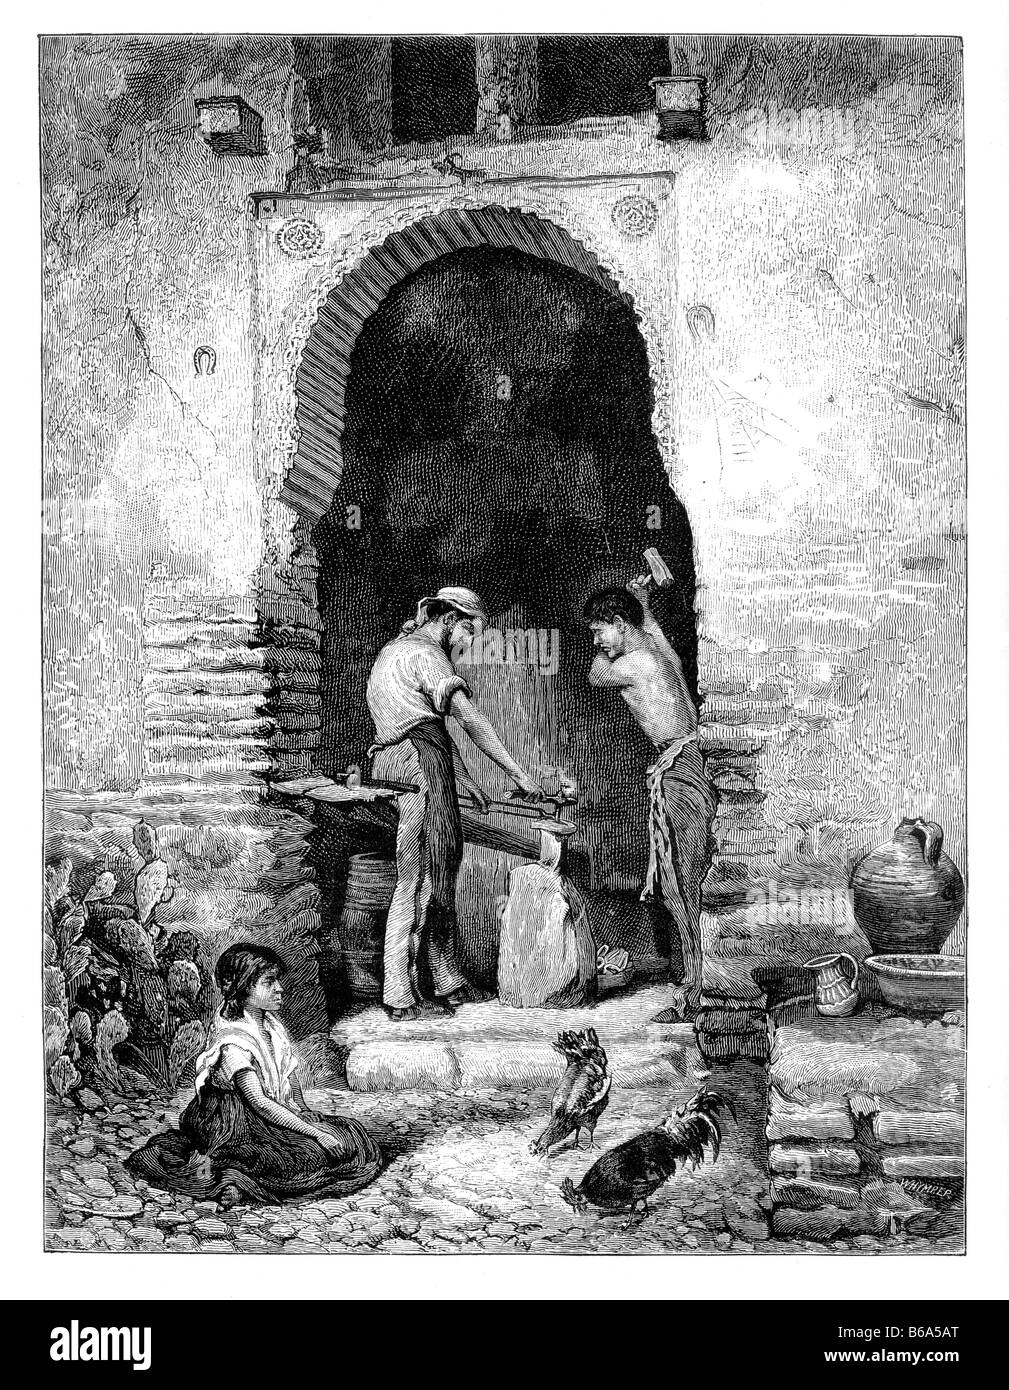 Blacksmith s Forge in Granada Spain 19th Century Illustration Stock Photo